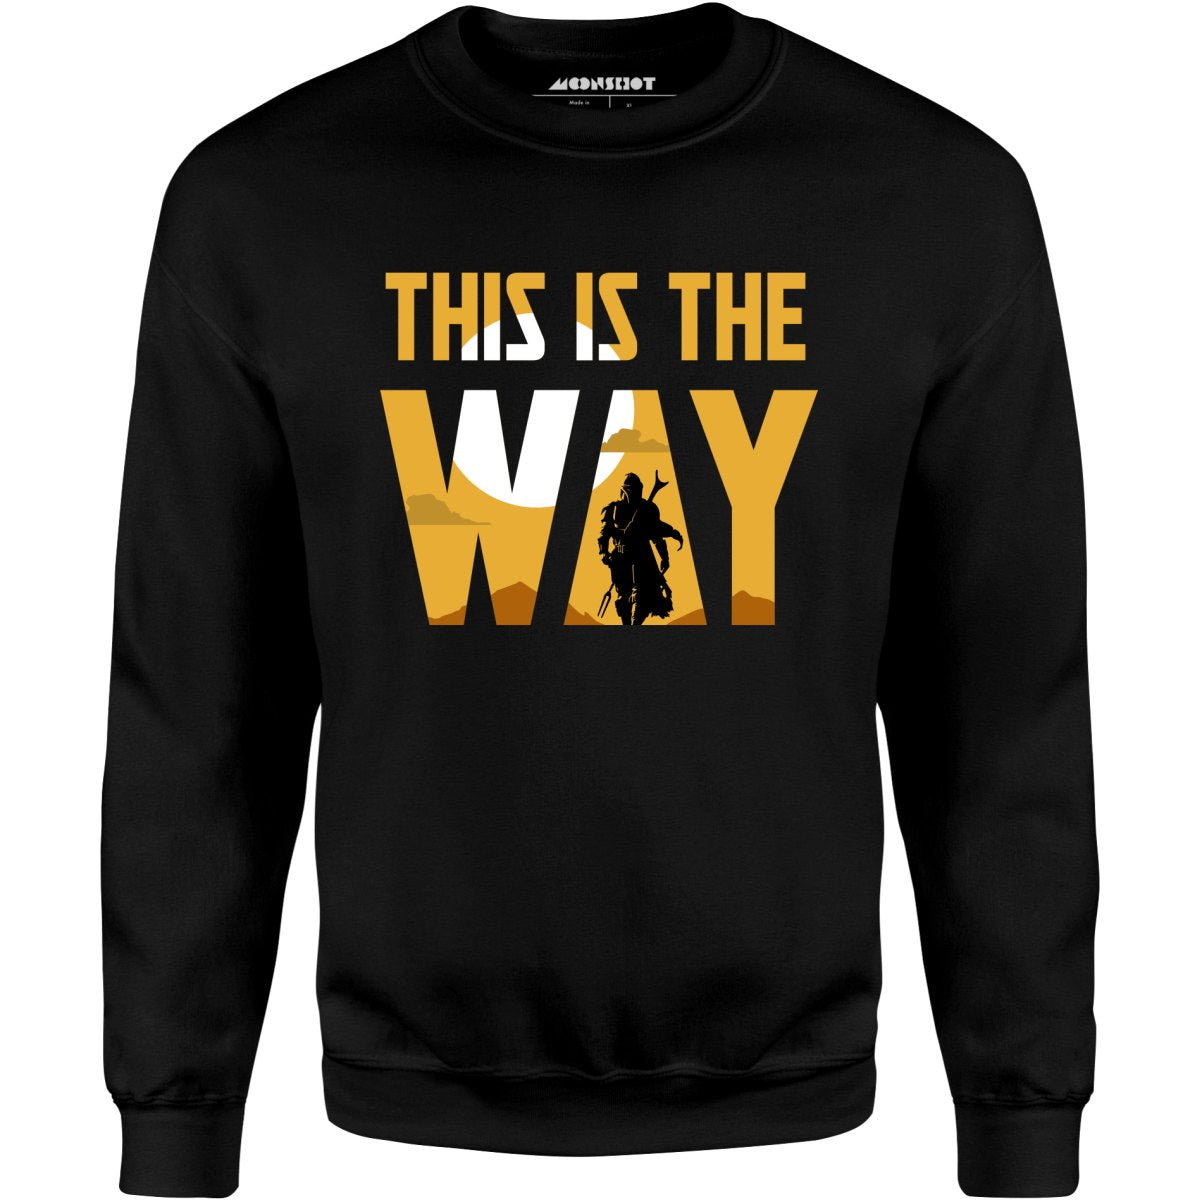 This is The Way - Unisex Sweatshirt